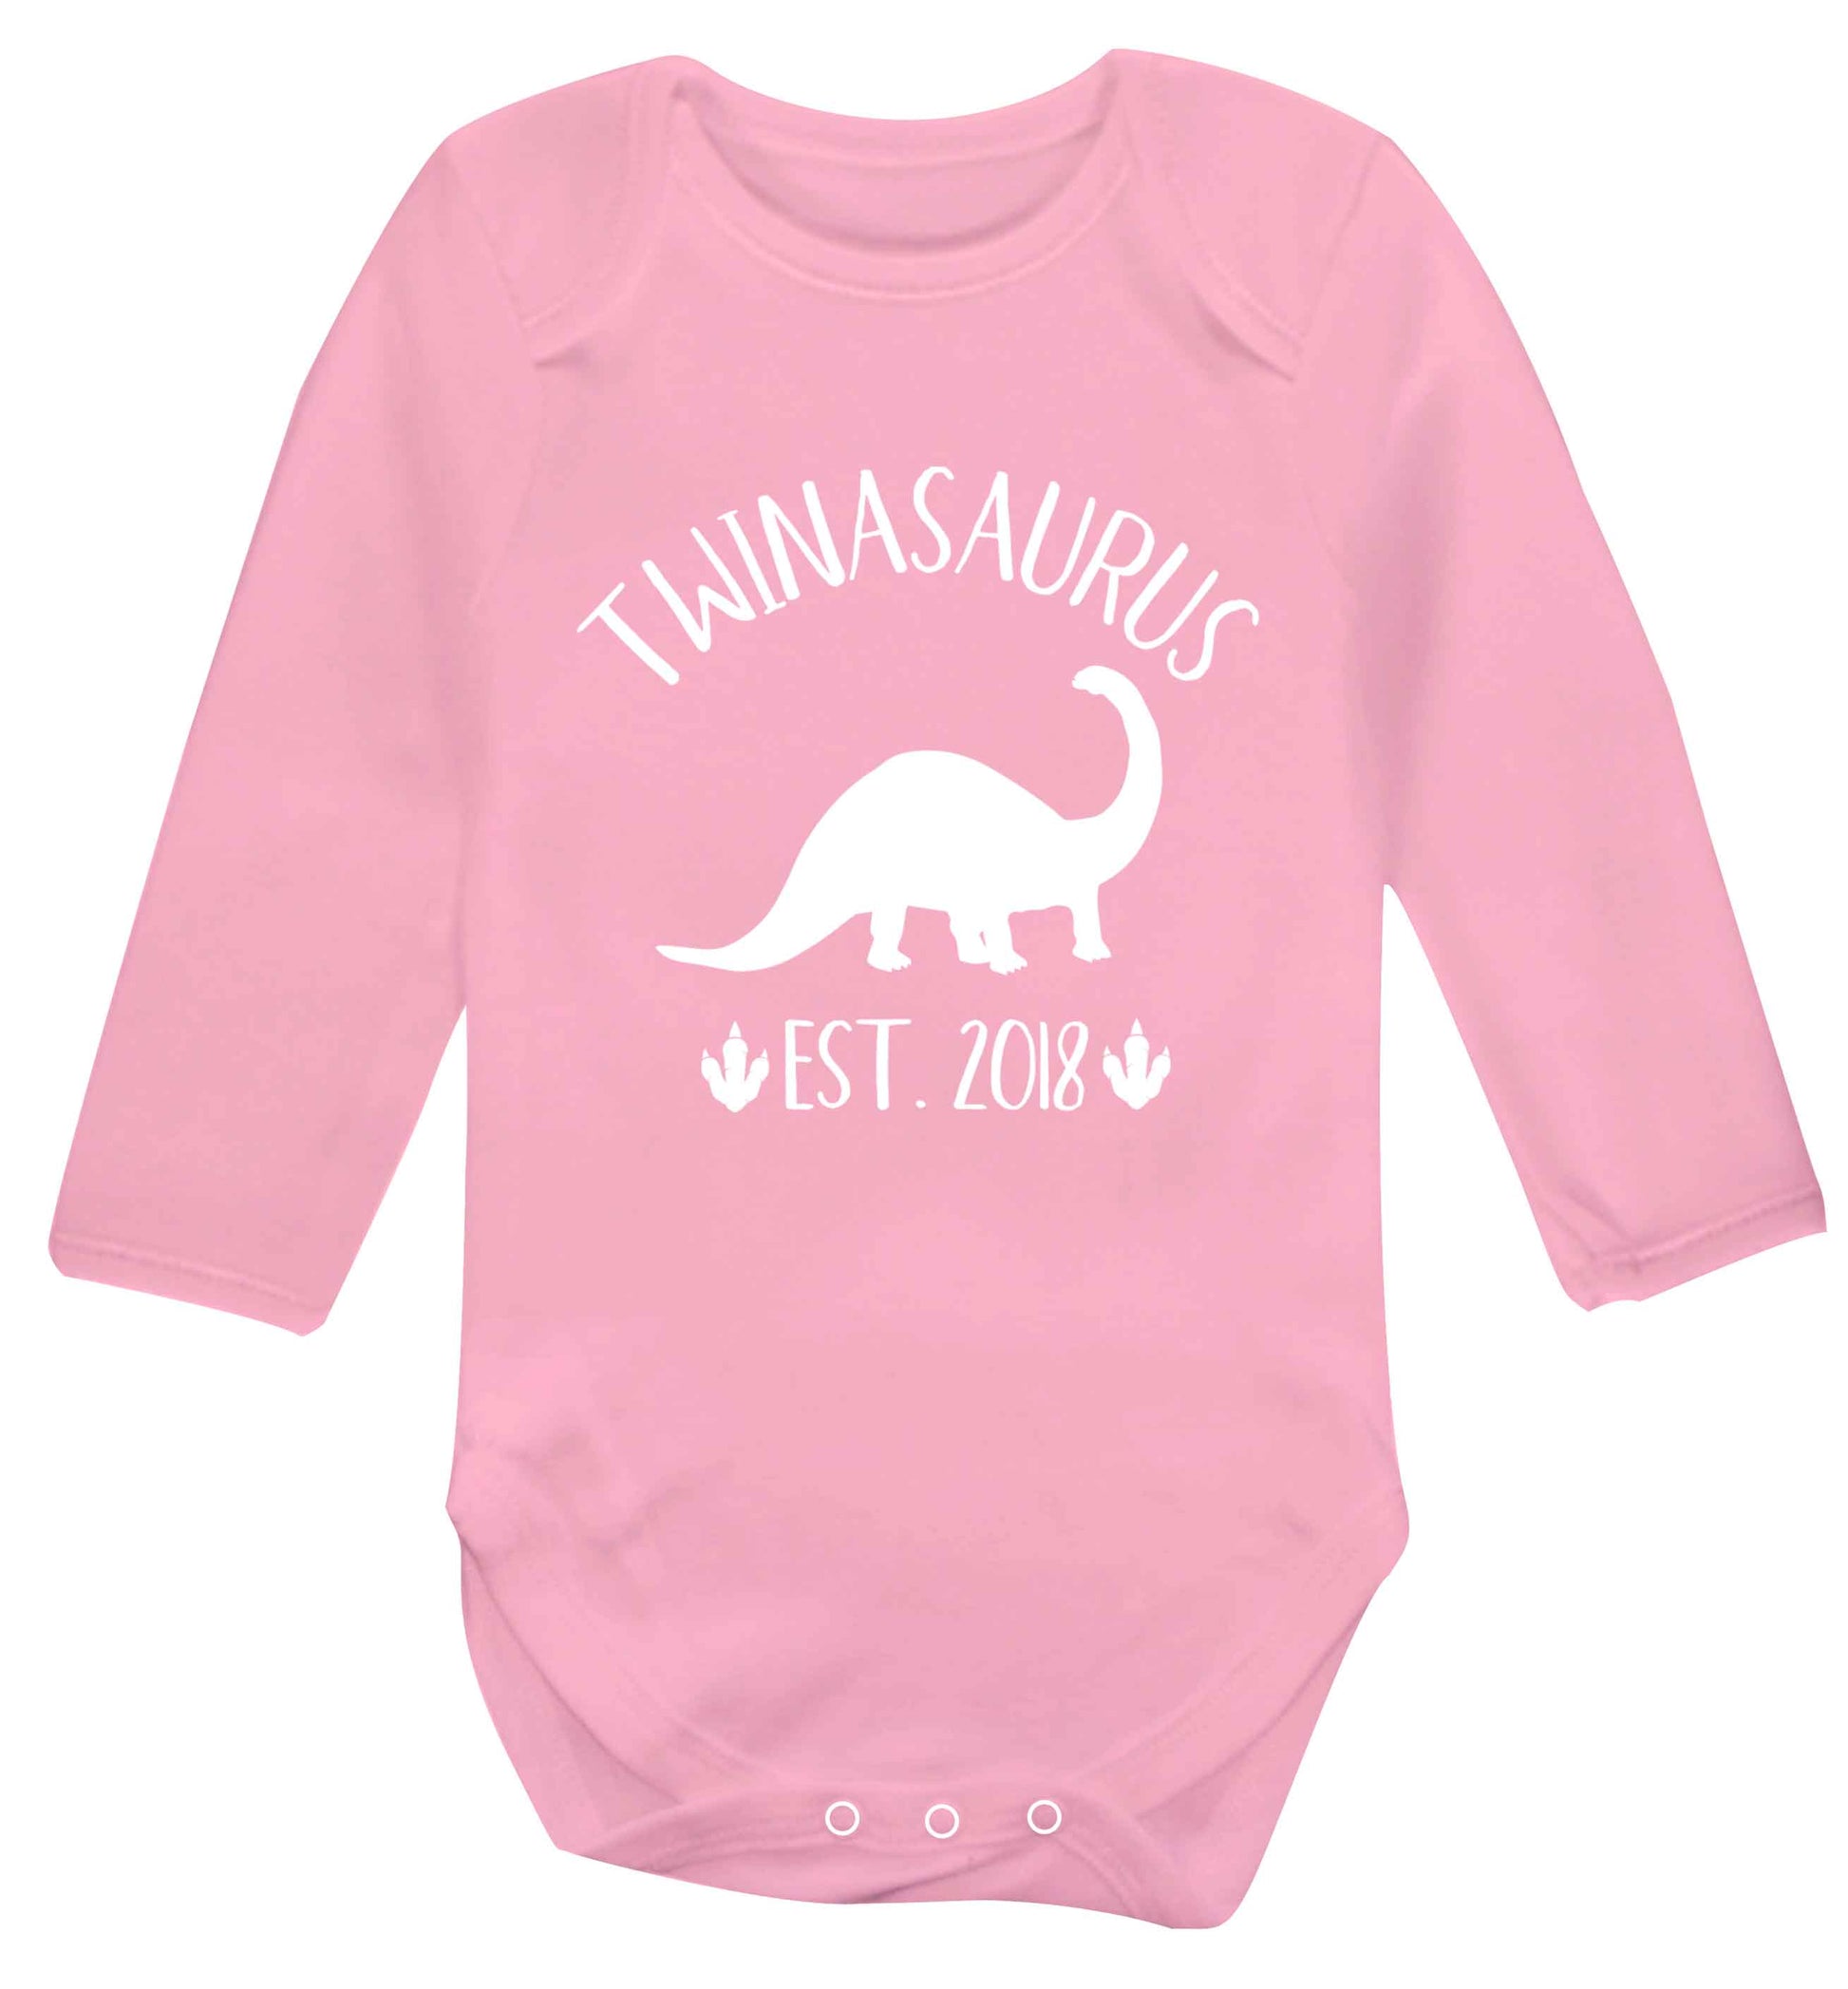 Personalised twinasaurus since (custom date) Baby Vest long sleeved pale pink 6-12 months